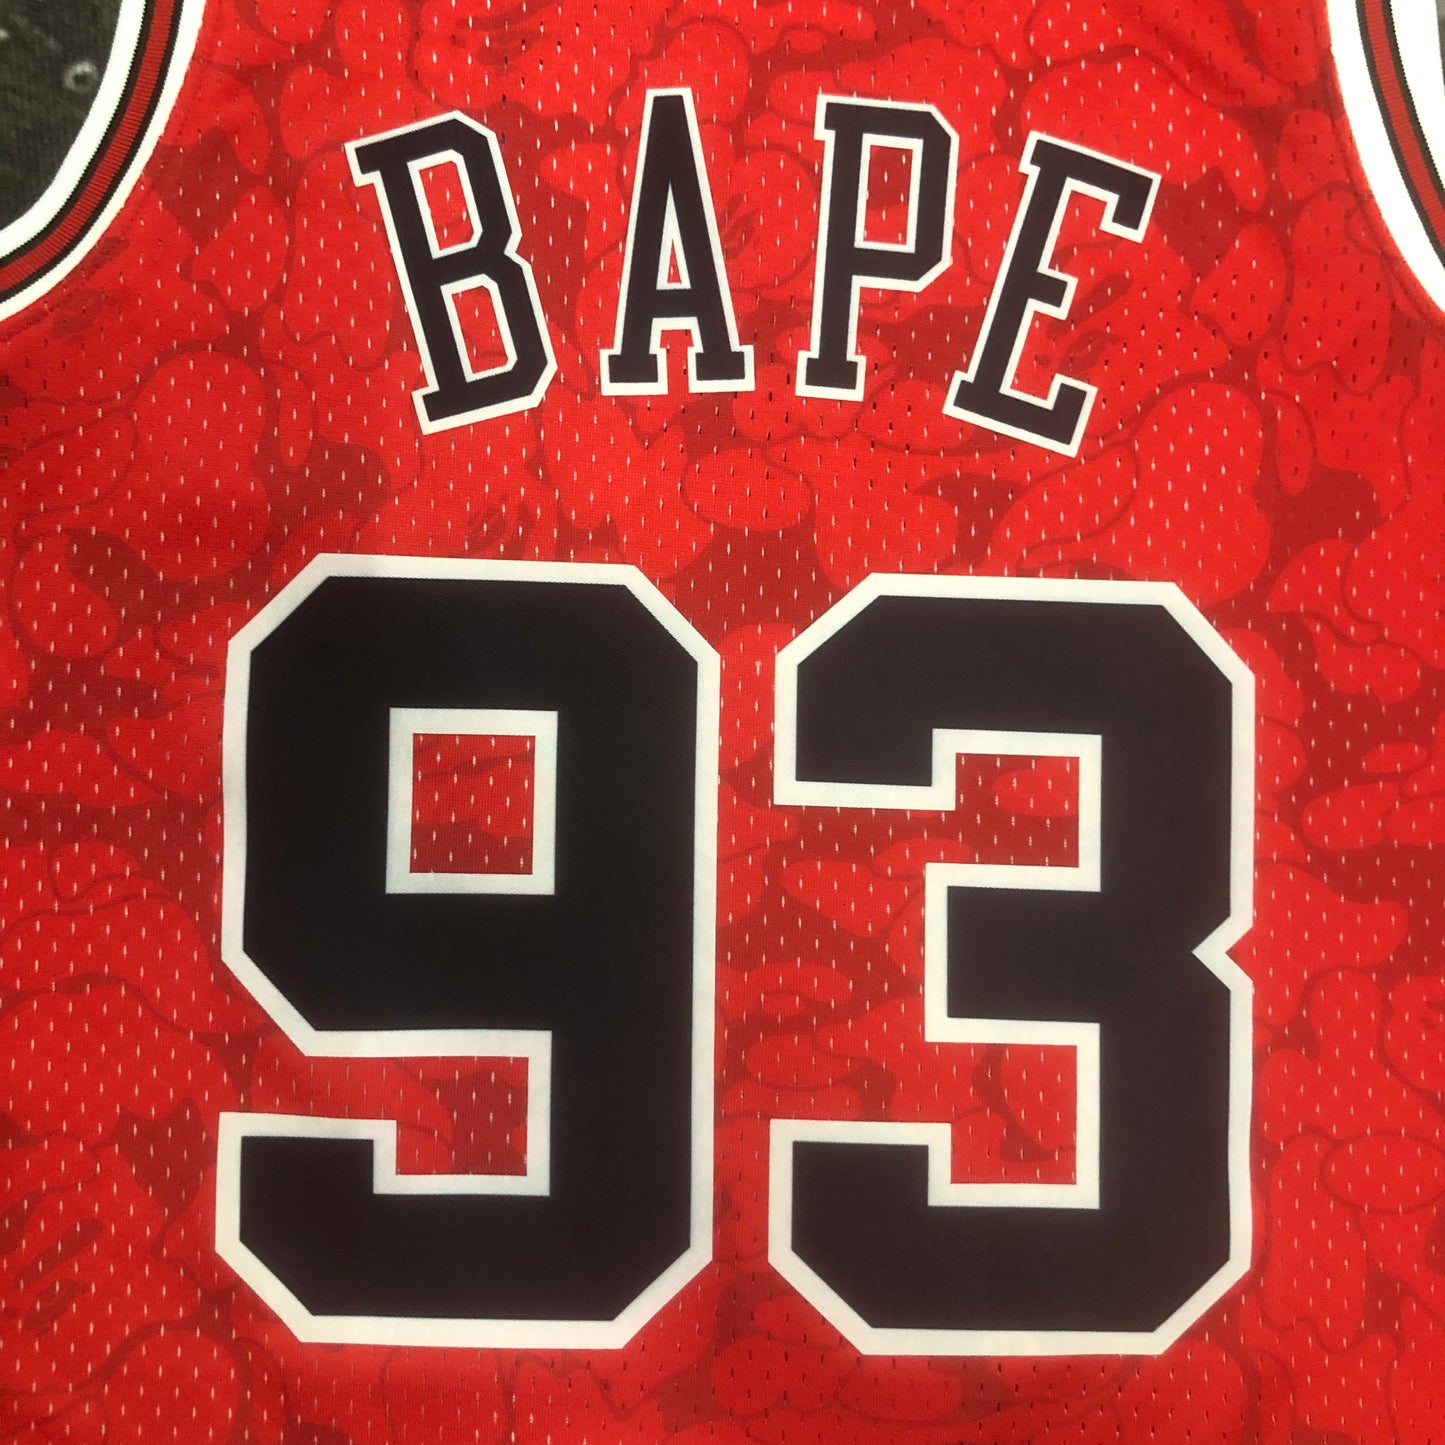 ‘A Bathing Ape’ (Bape) Brand NBA Chicago Bulls Mitchell & Ness Hardwood Classic Red Jersey